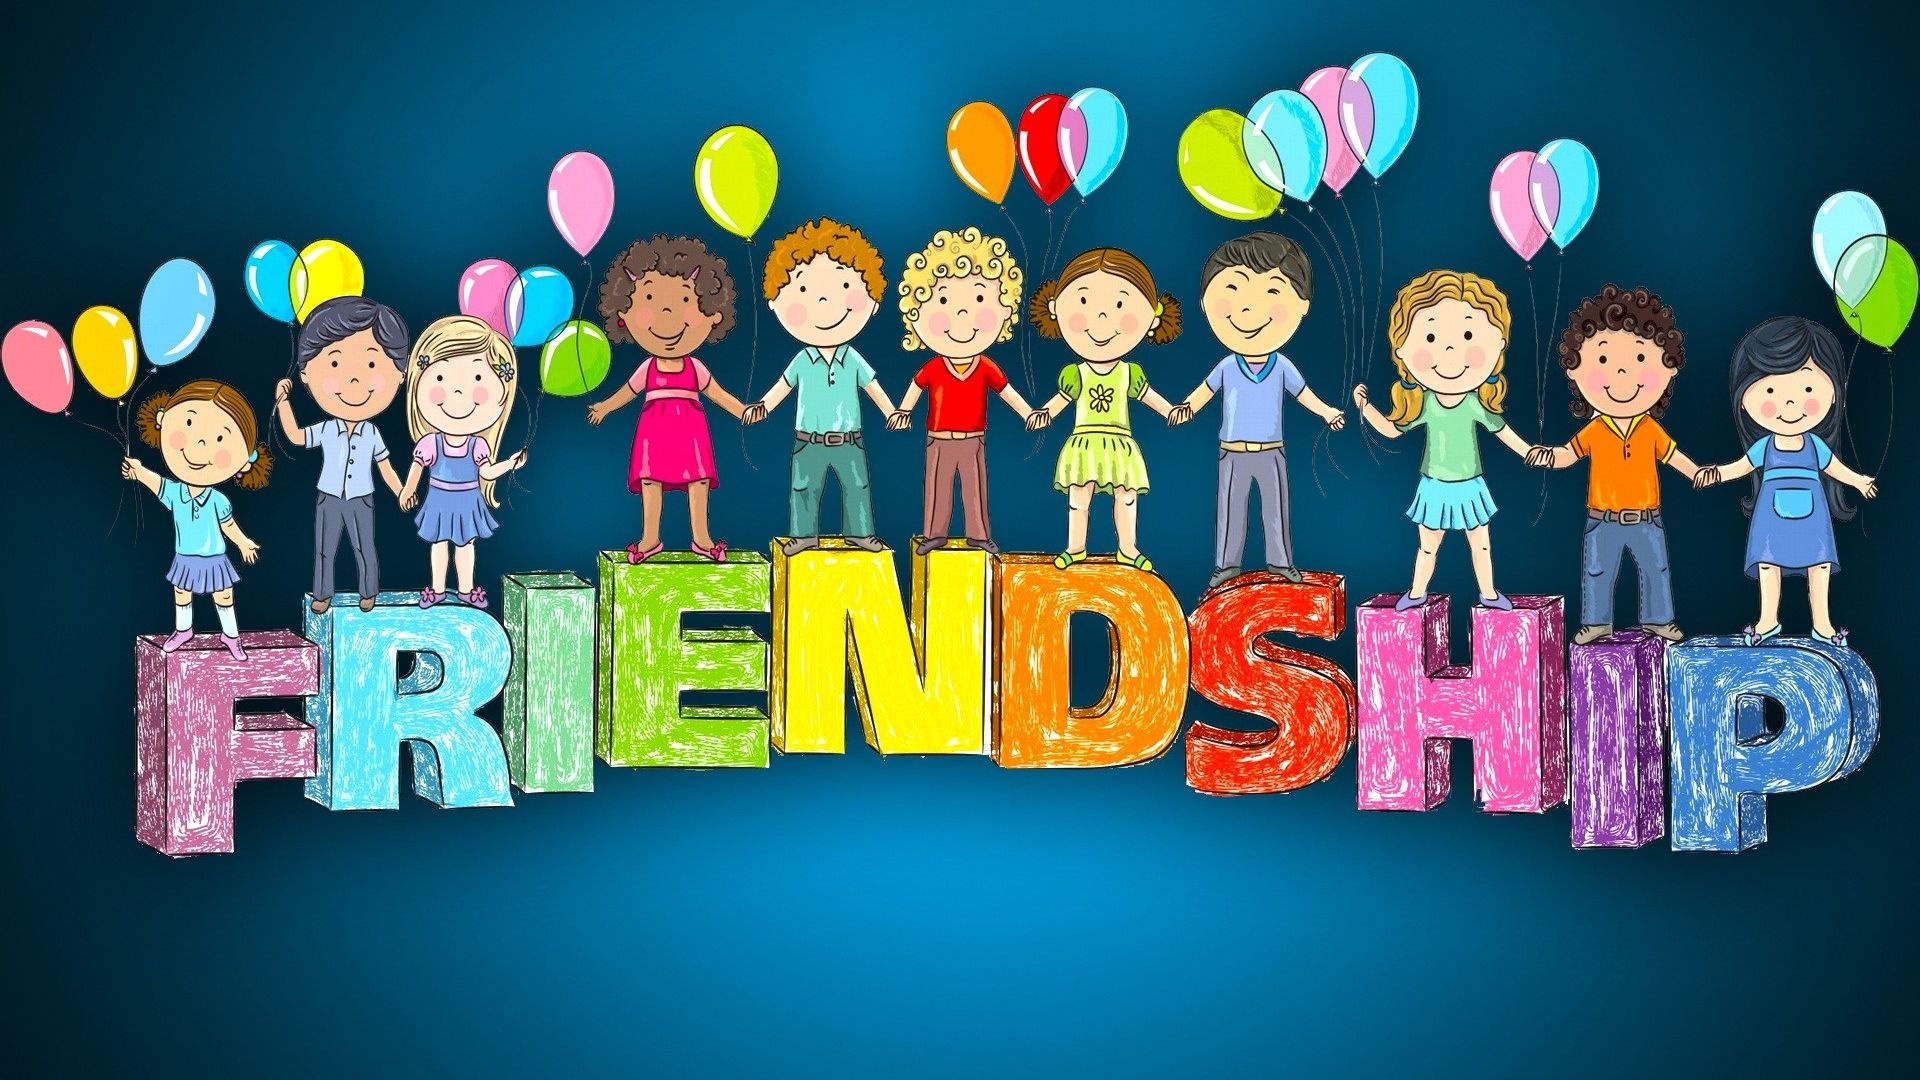 Friendship: Devotion, Sharing similar interests and feelings. 1920x1080 Full HD Wallpaper.